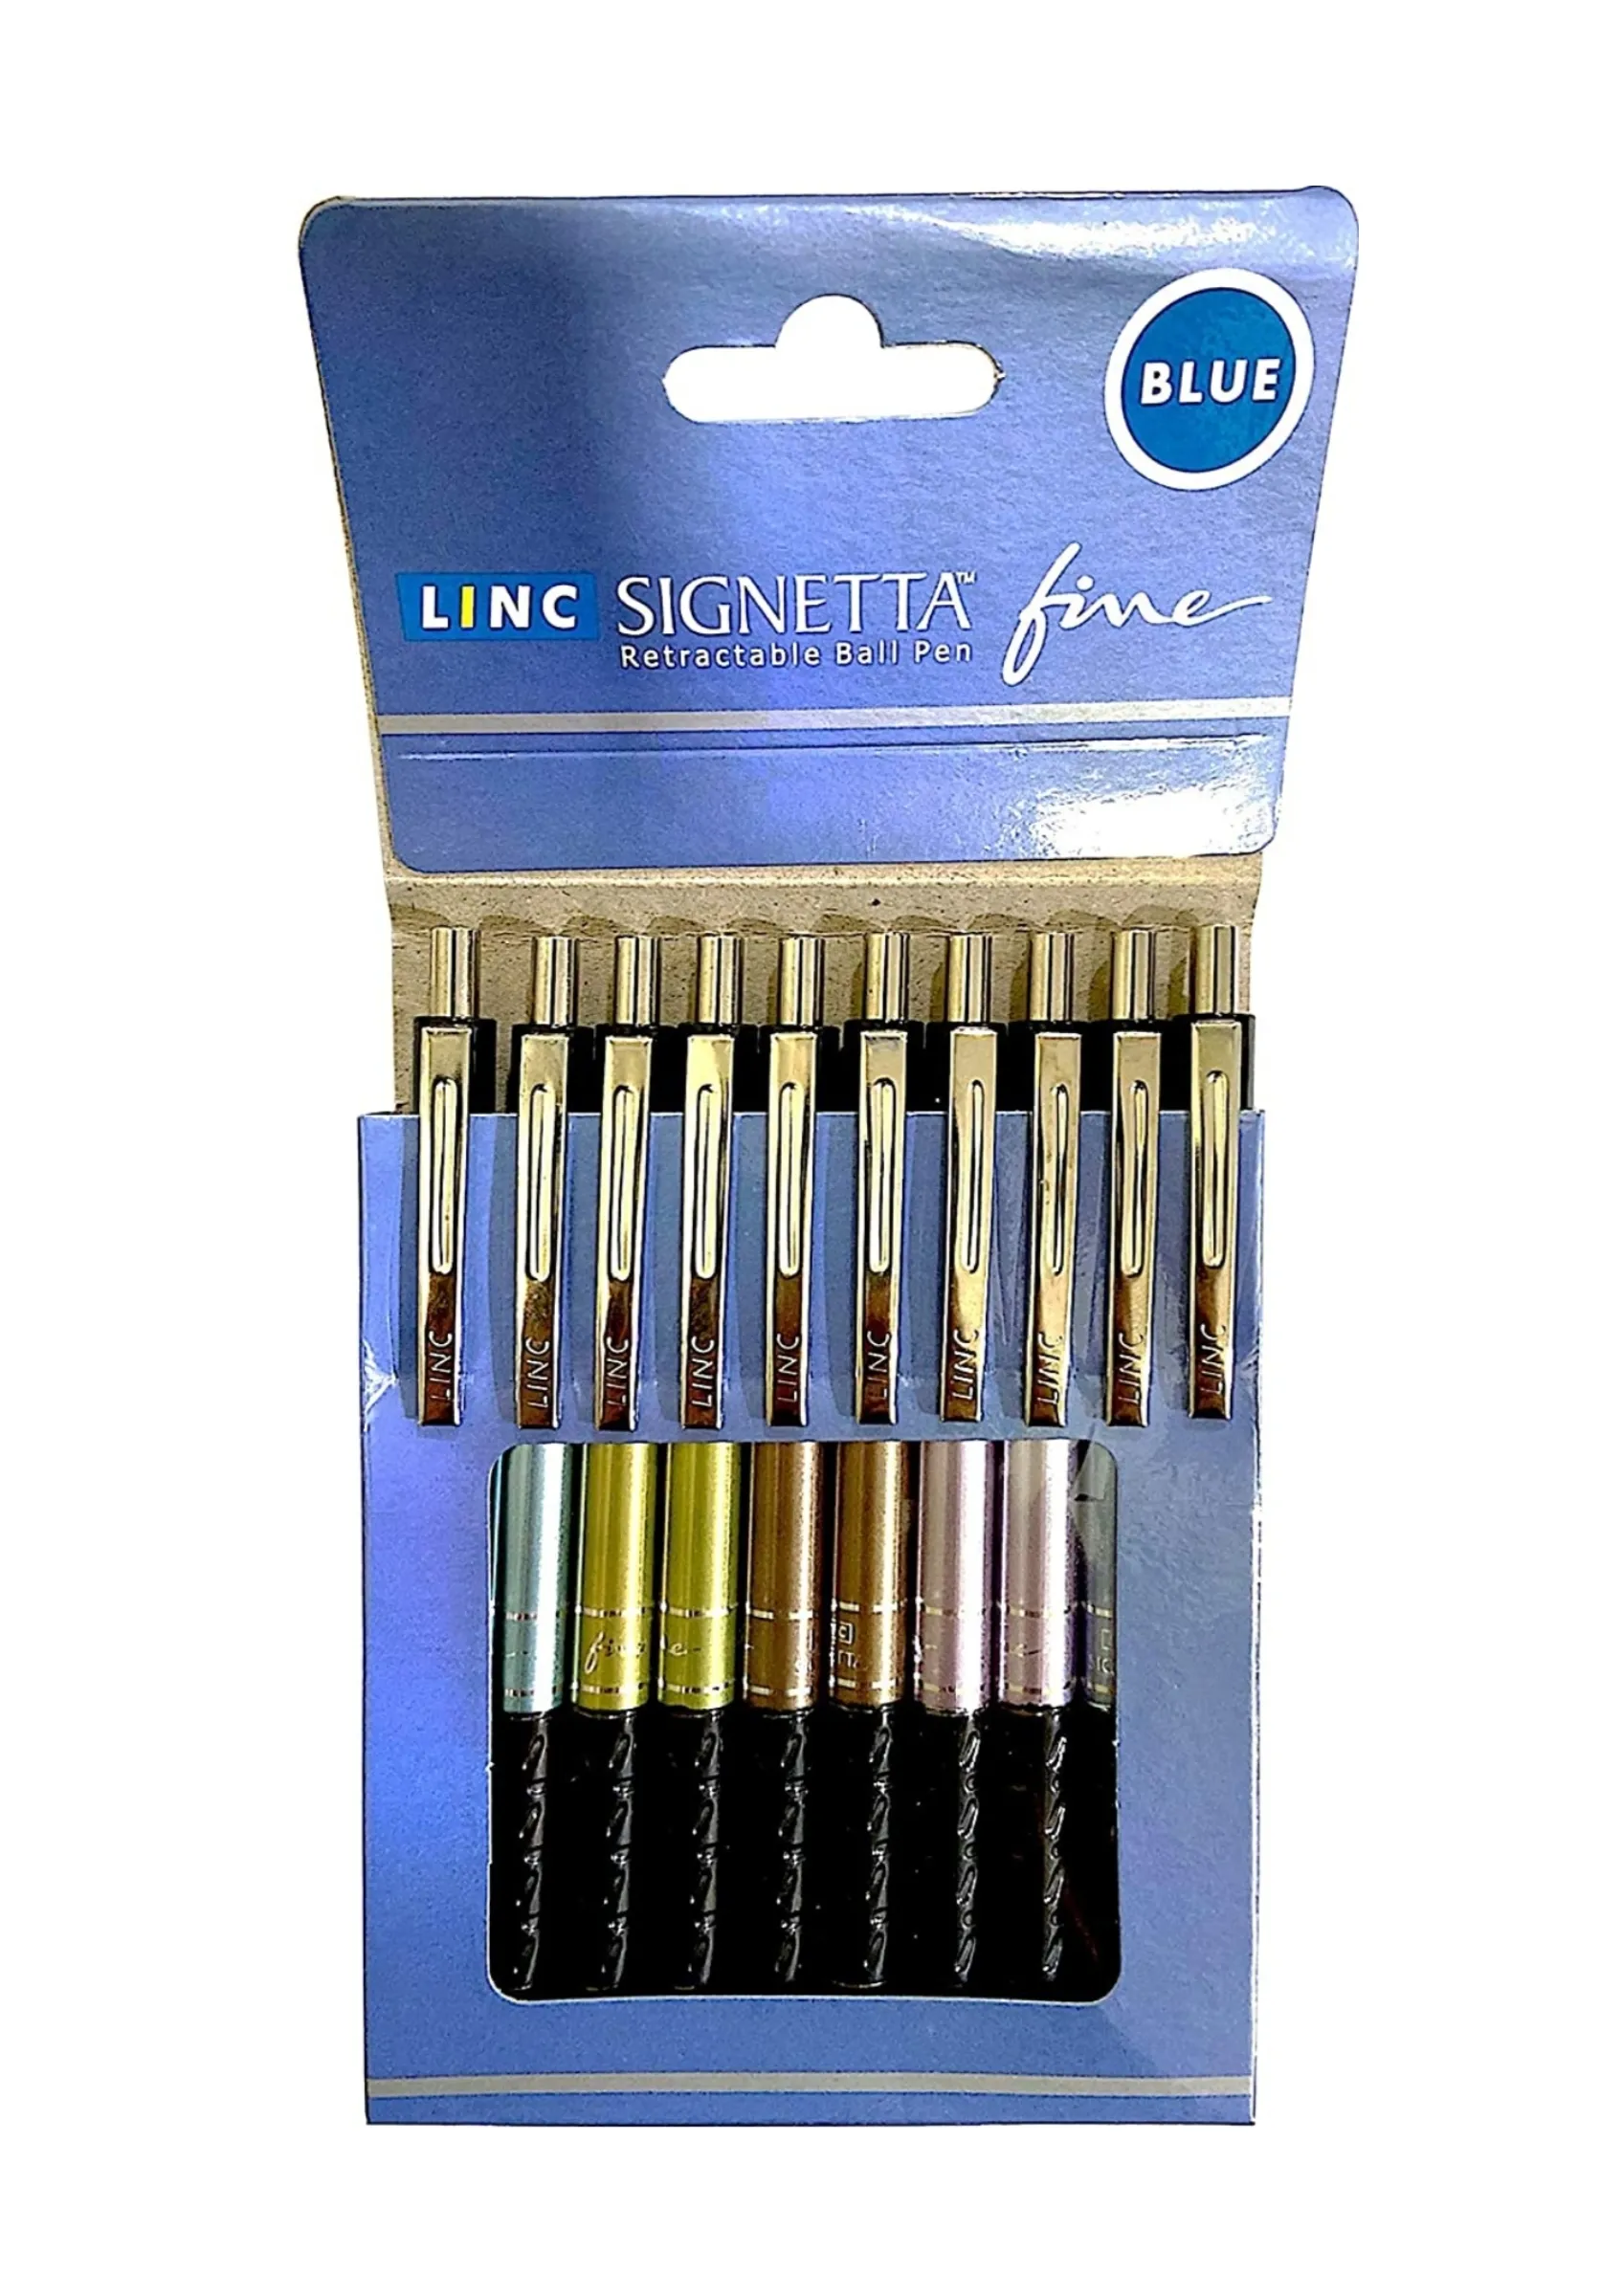 Linc Signetta Fine Ball Pen 0.7mm, Blue Pen, Retractable Pen Pack of 10 Pen